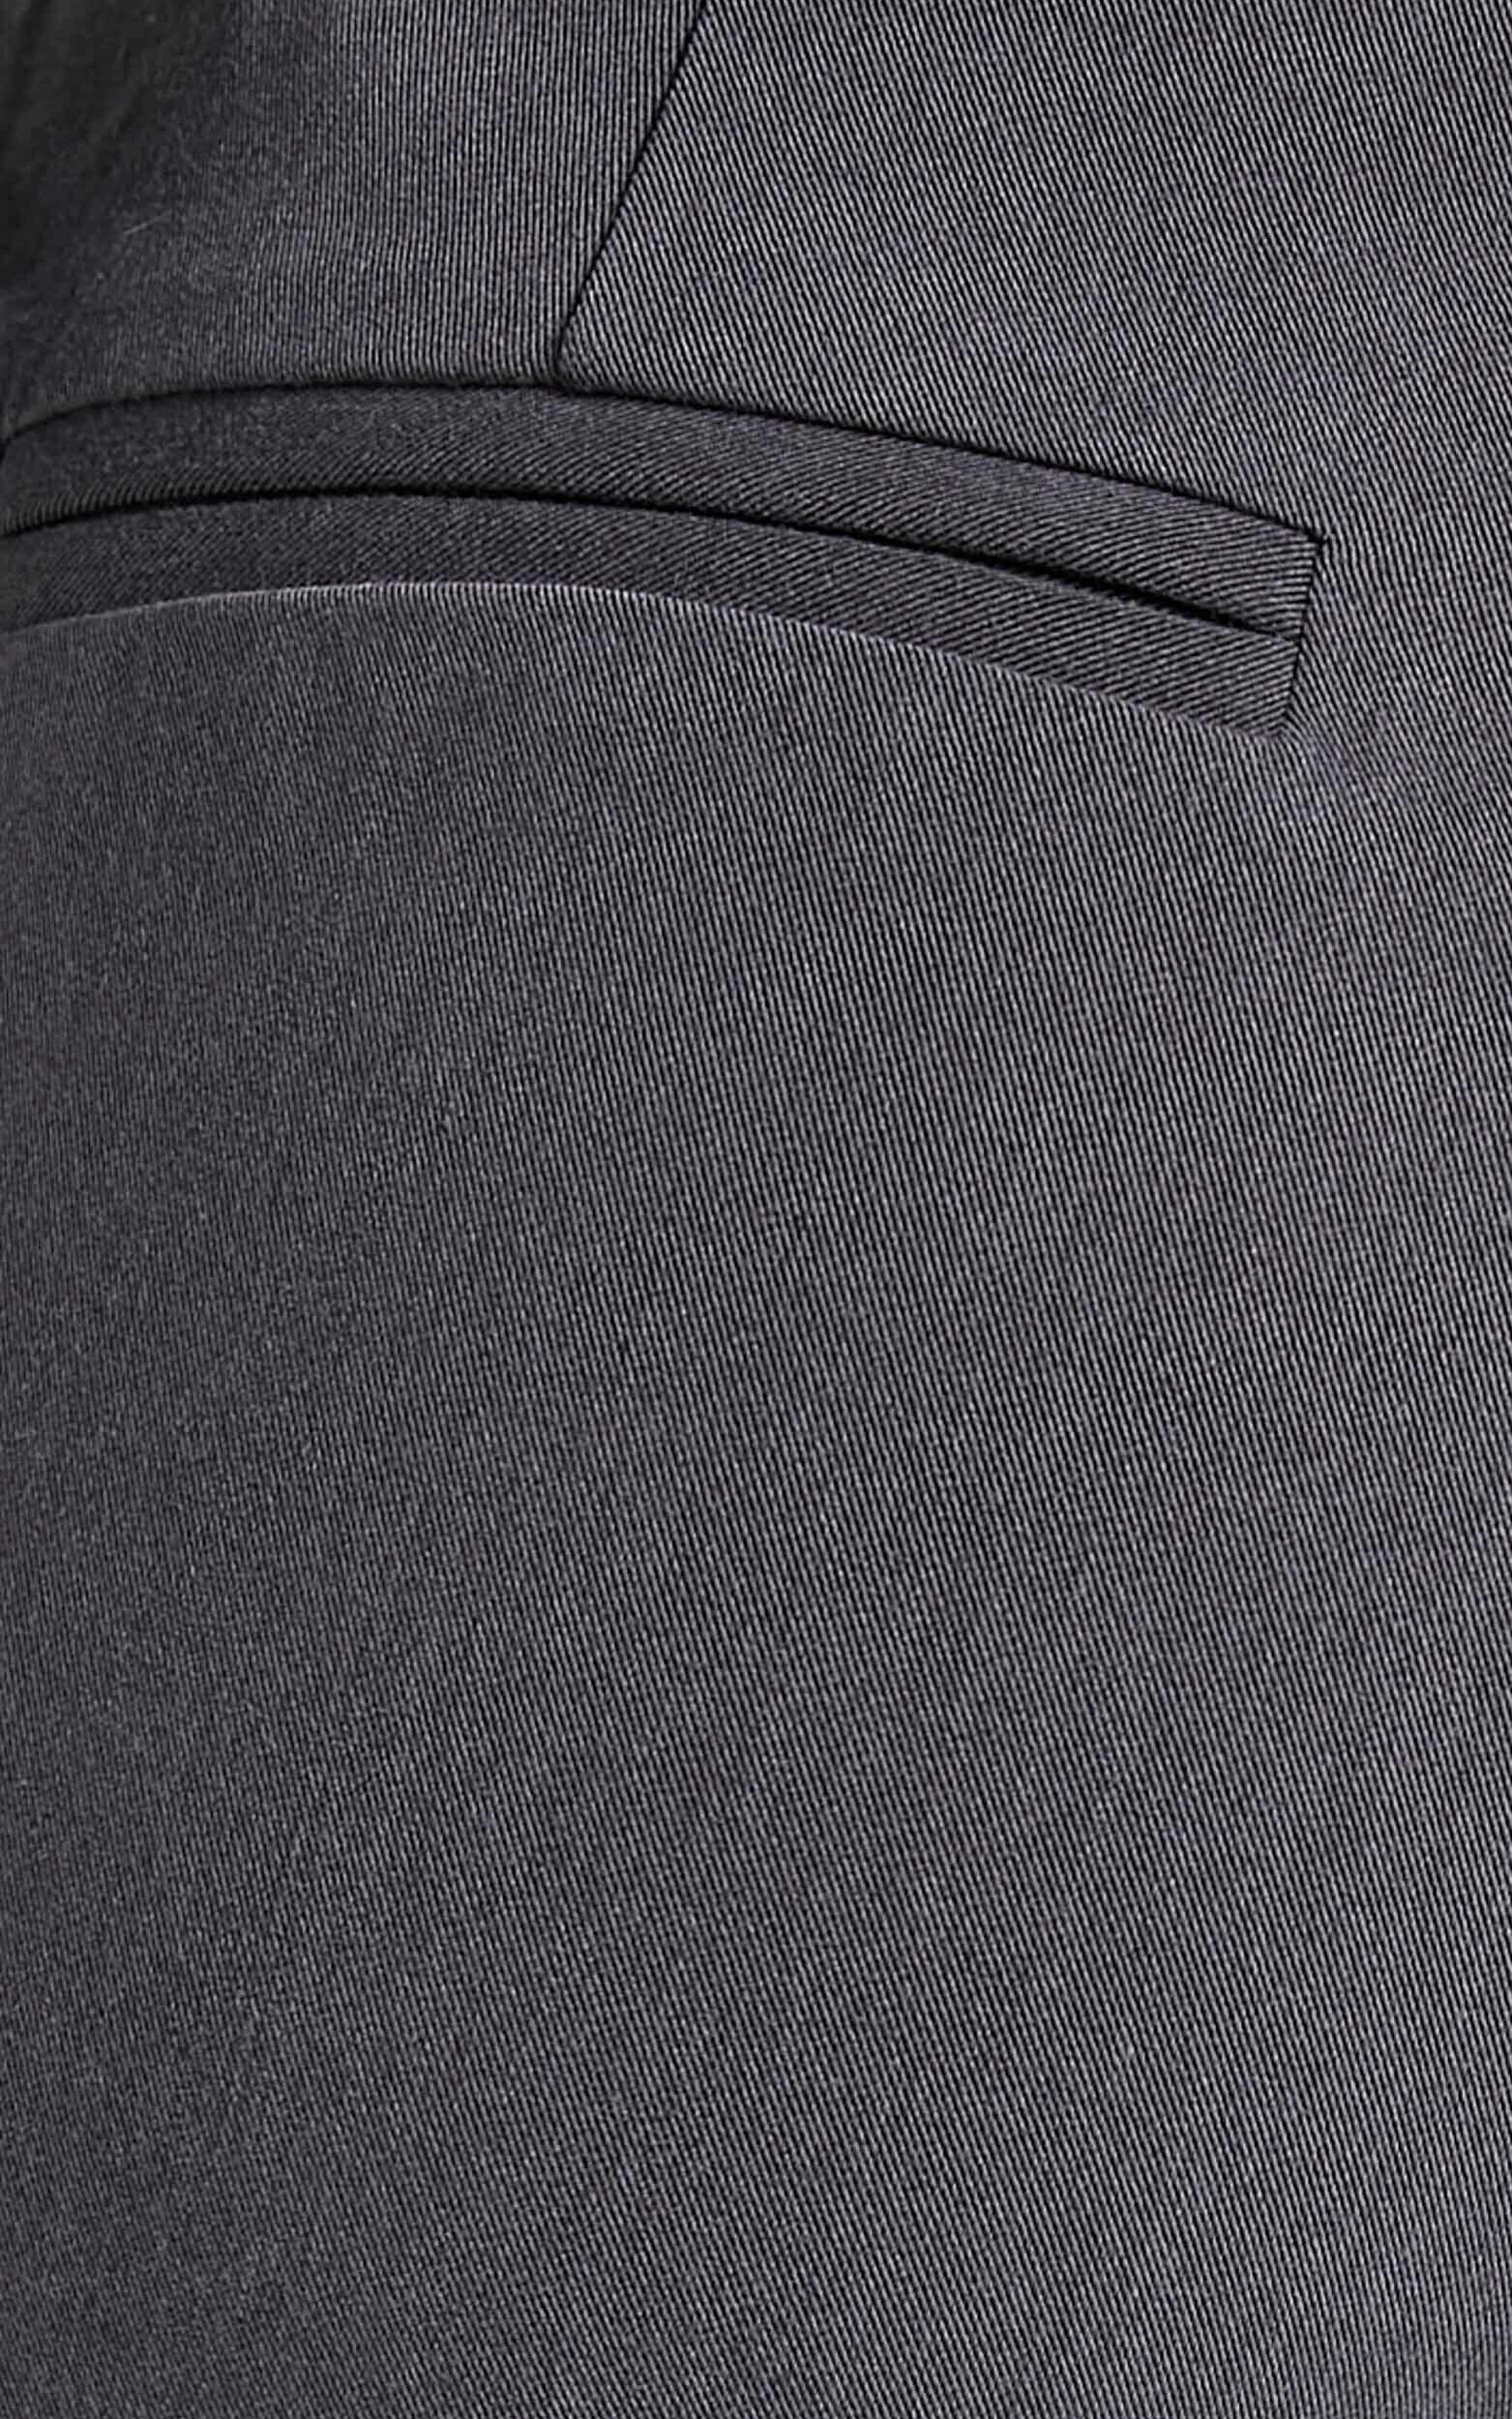 Sabra Wide Leg Pants in Charcoal Grey | Showpo